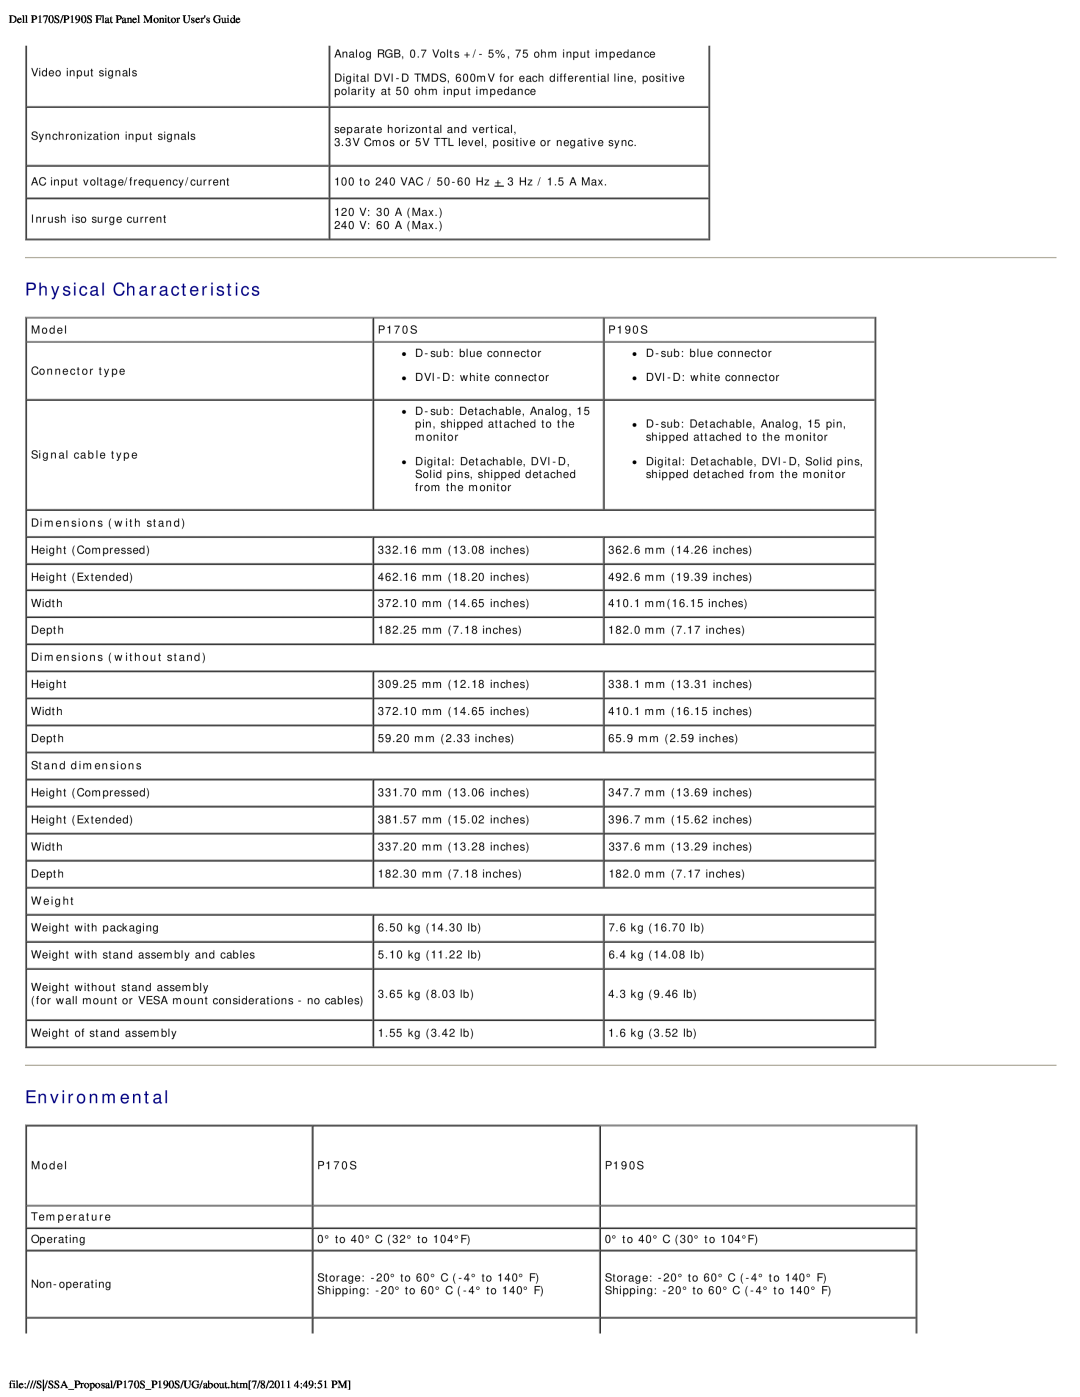 Dell P170s, P190S appendix Physical Characteristics, Environmental 